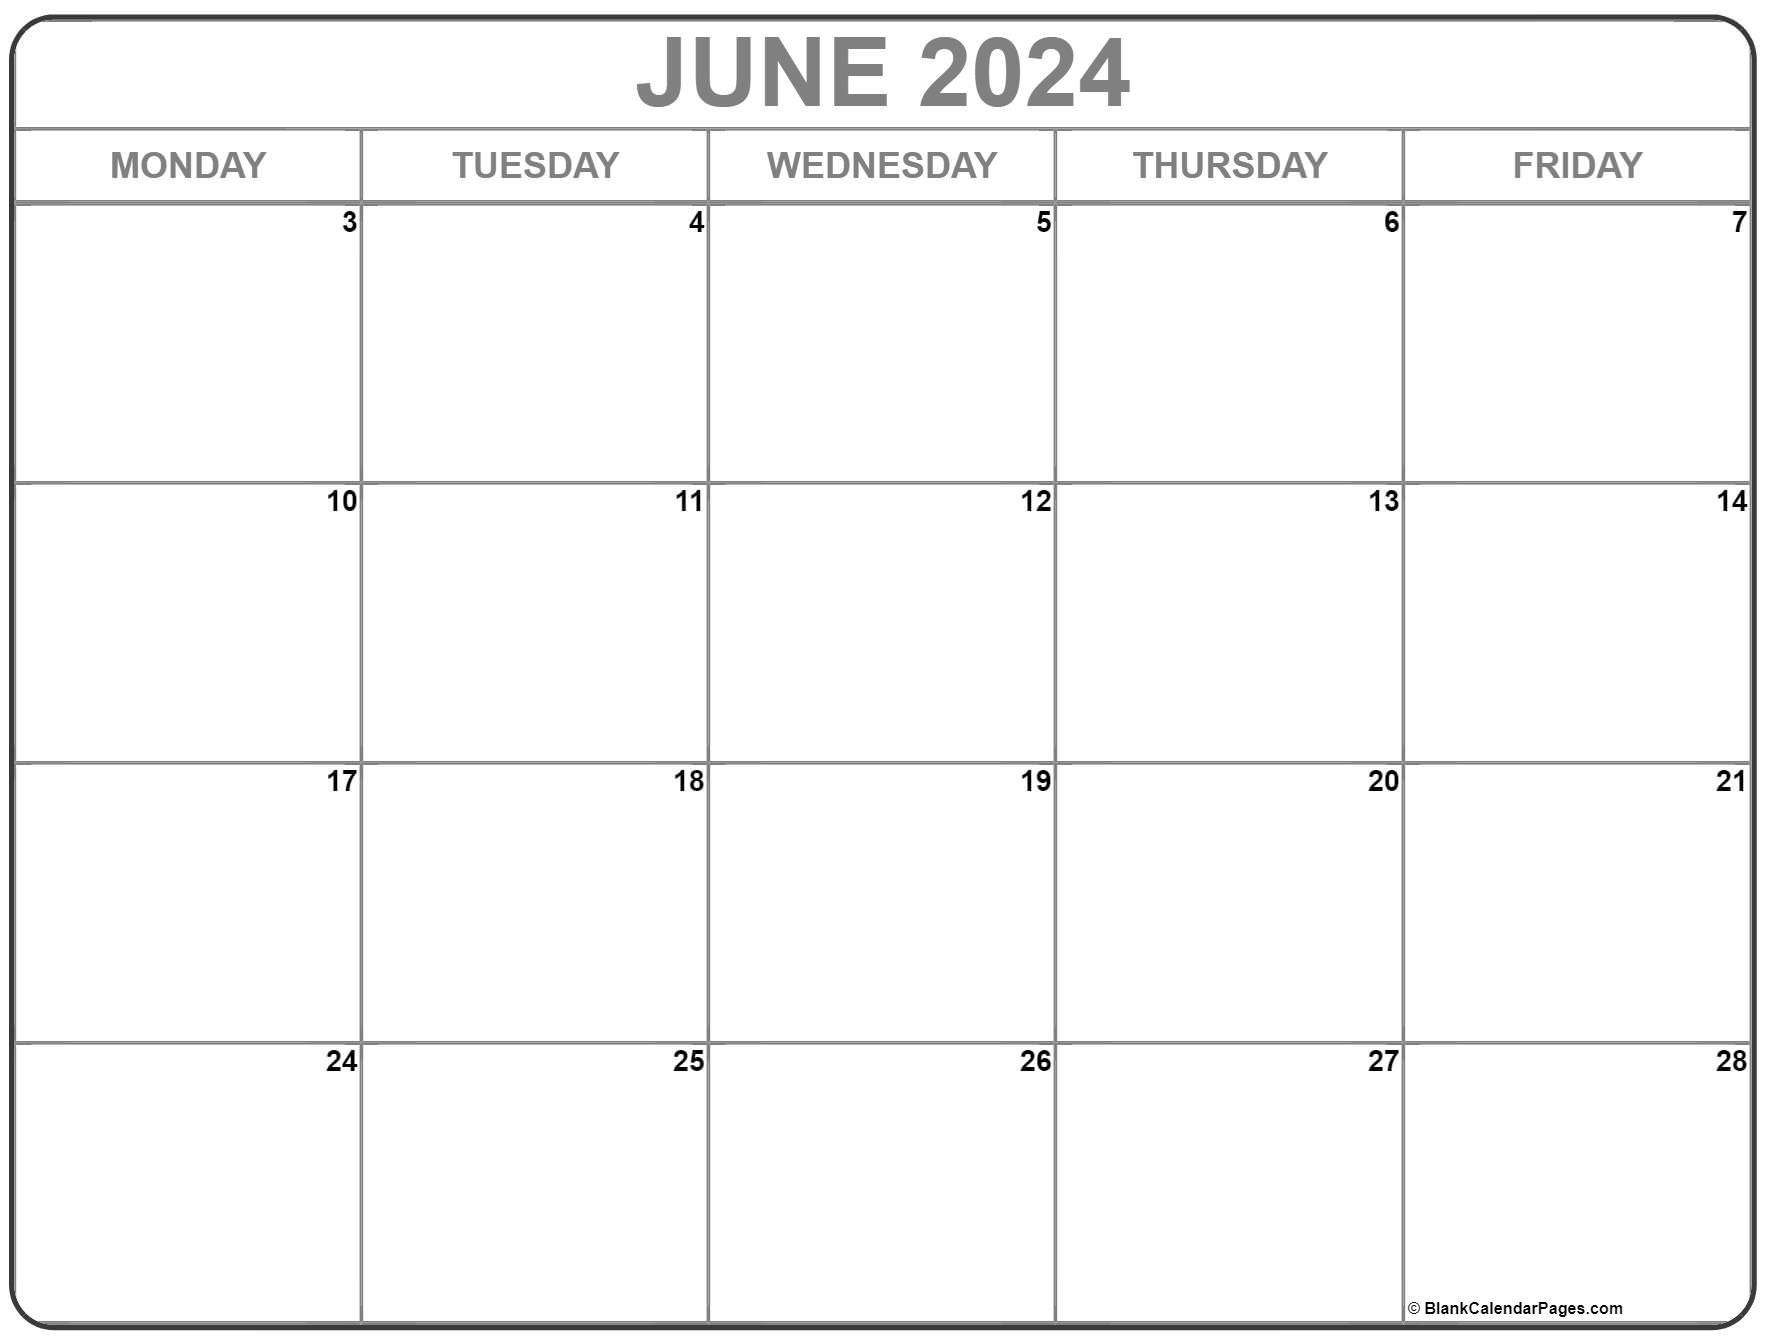 june-calendar-2023-vertical-calendar-quickly